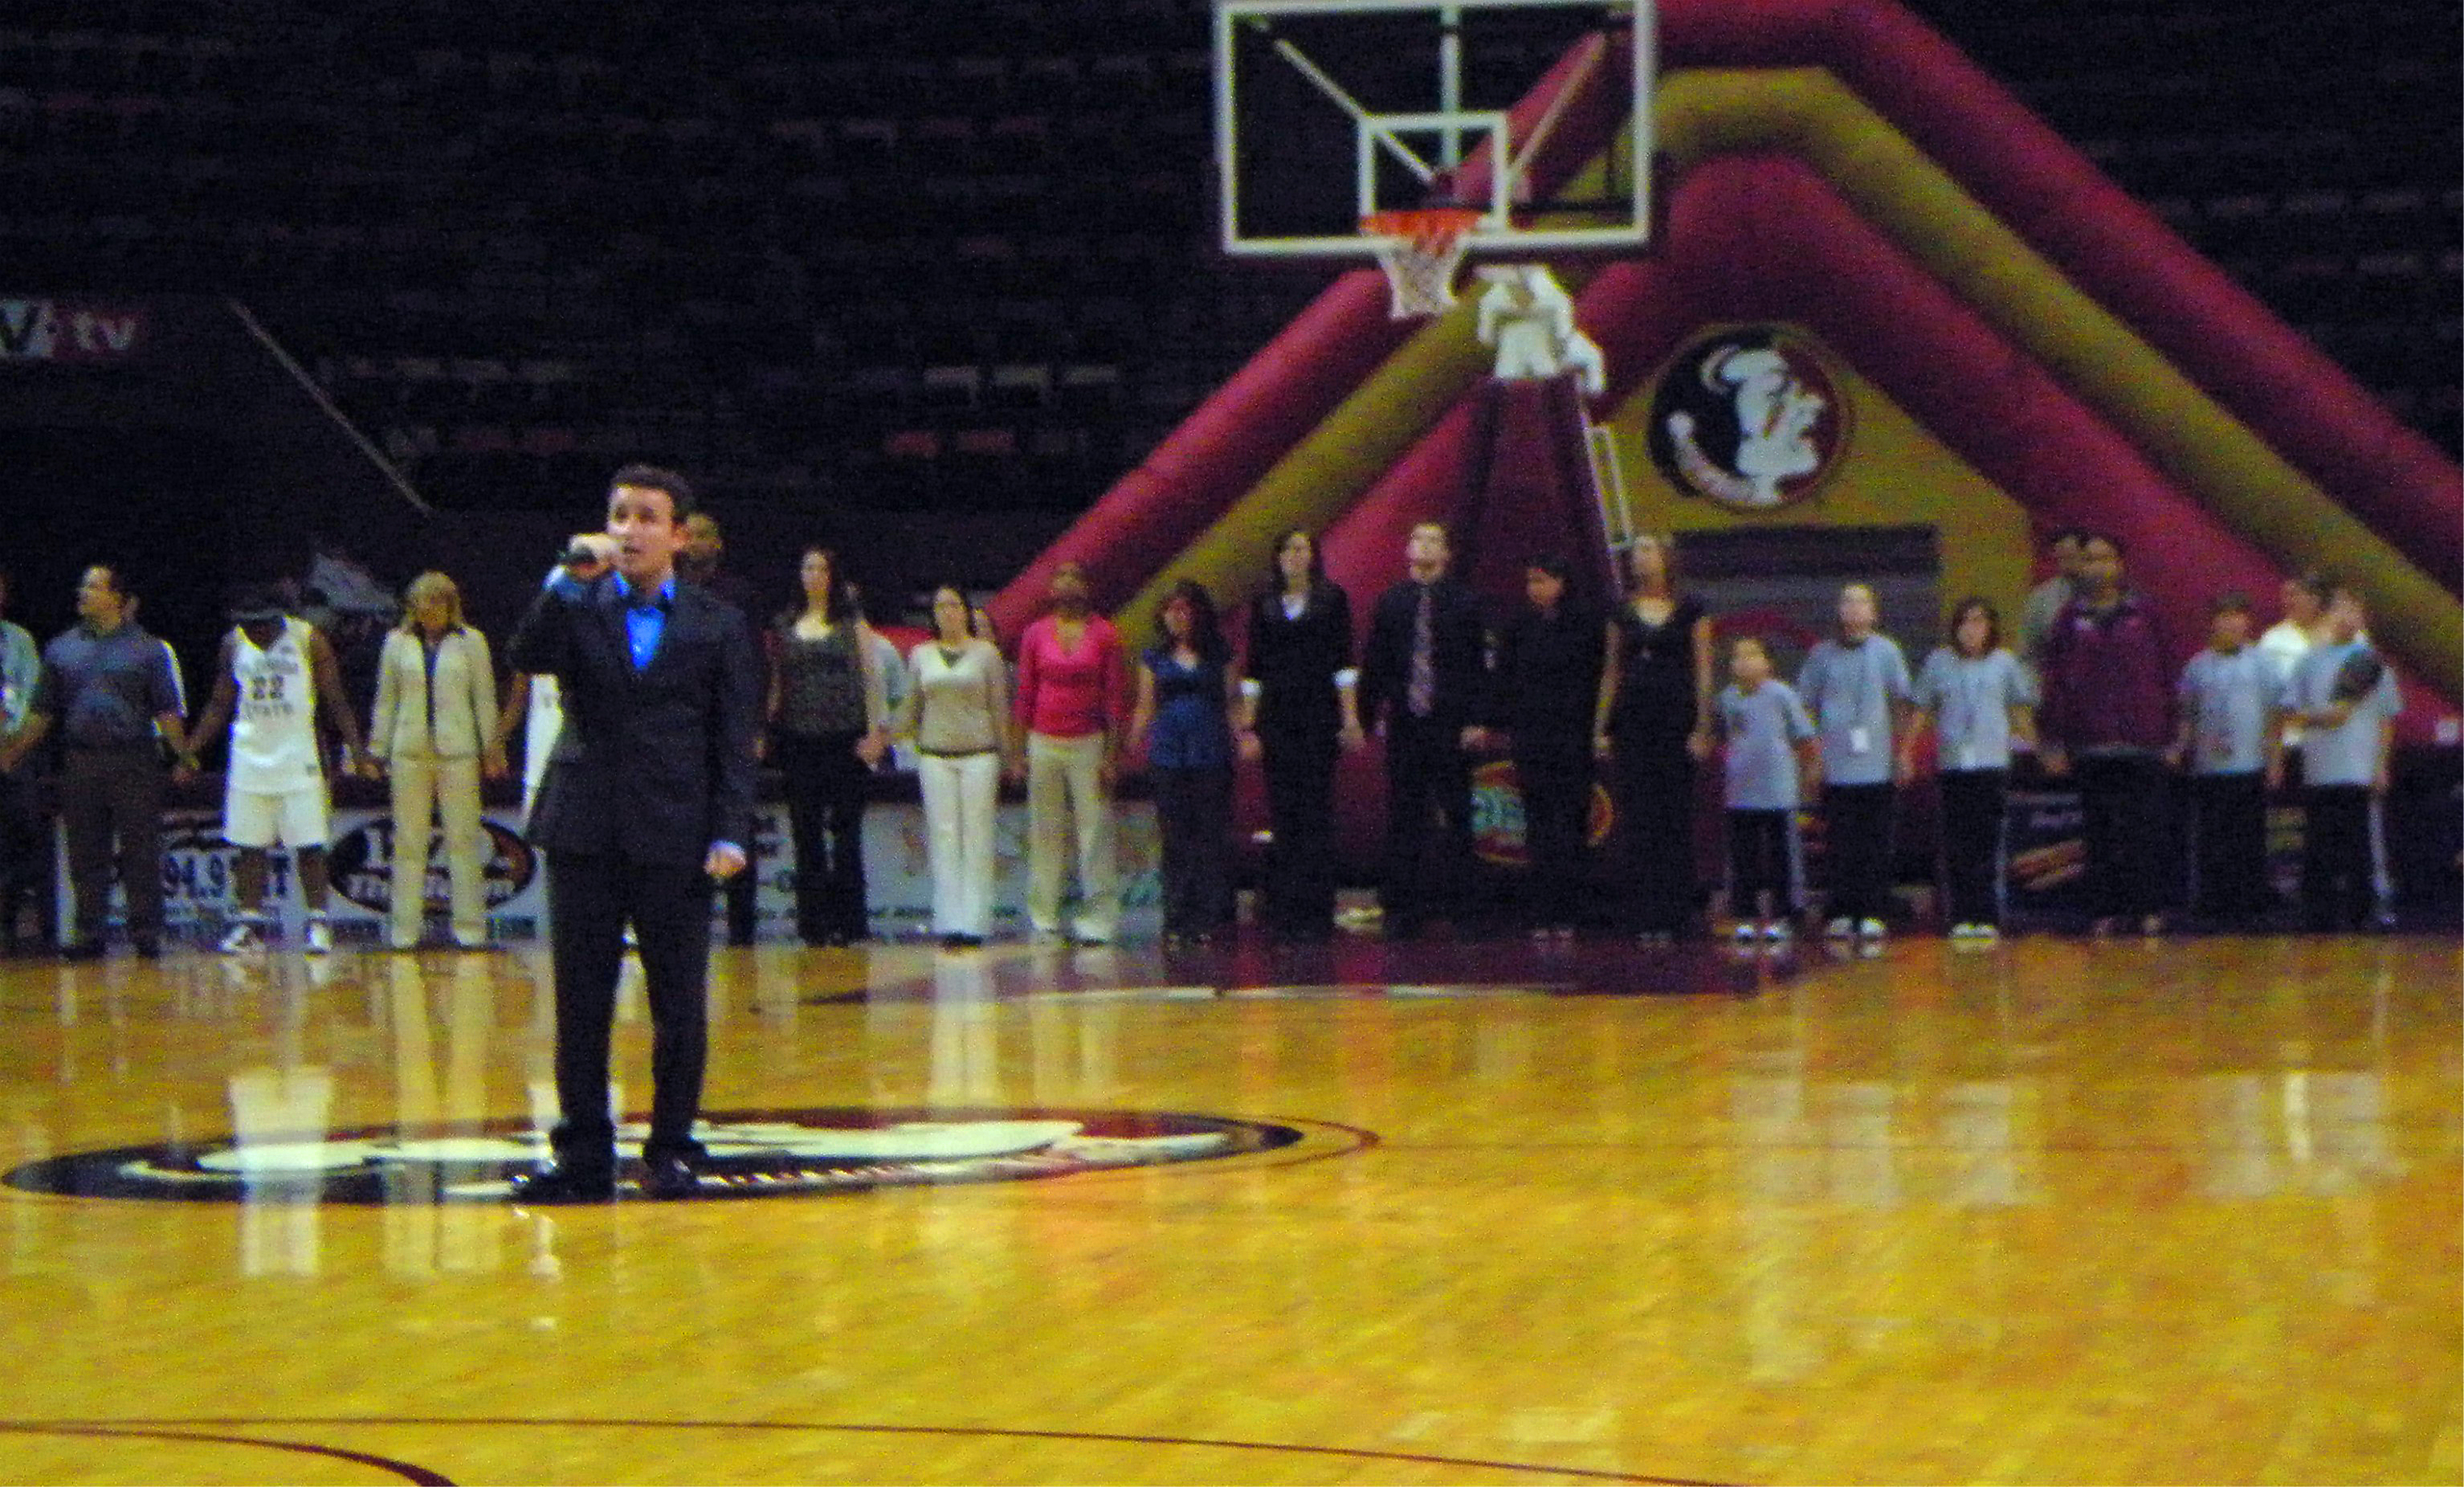 Singing the National Anthem at FSU's basketball game